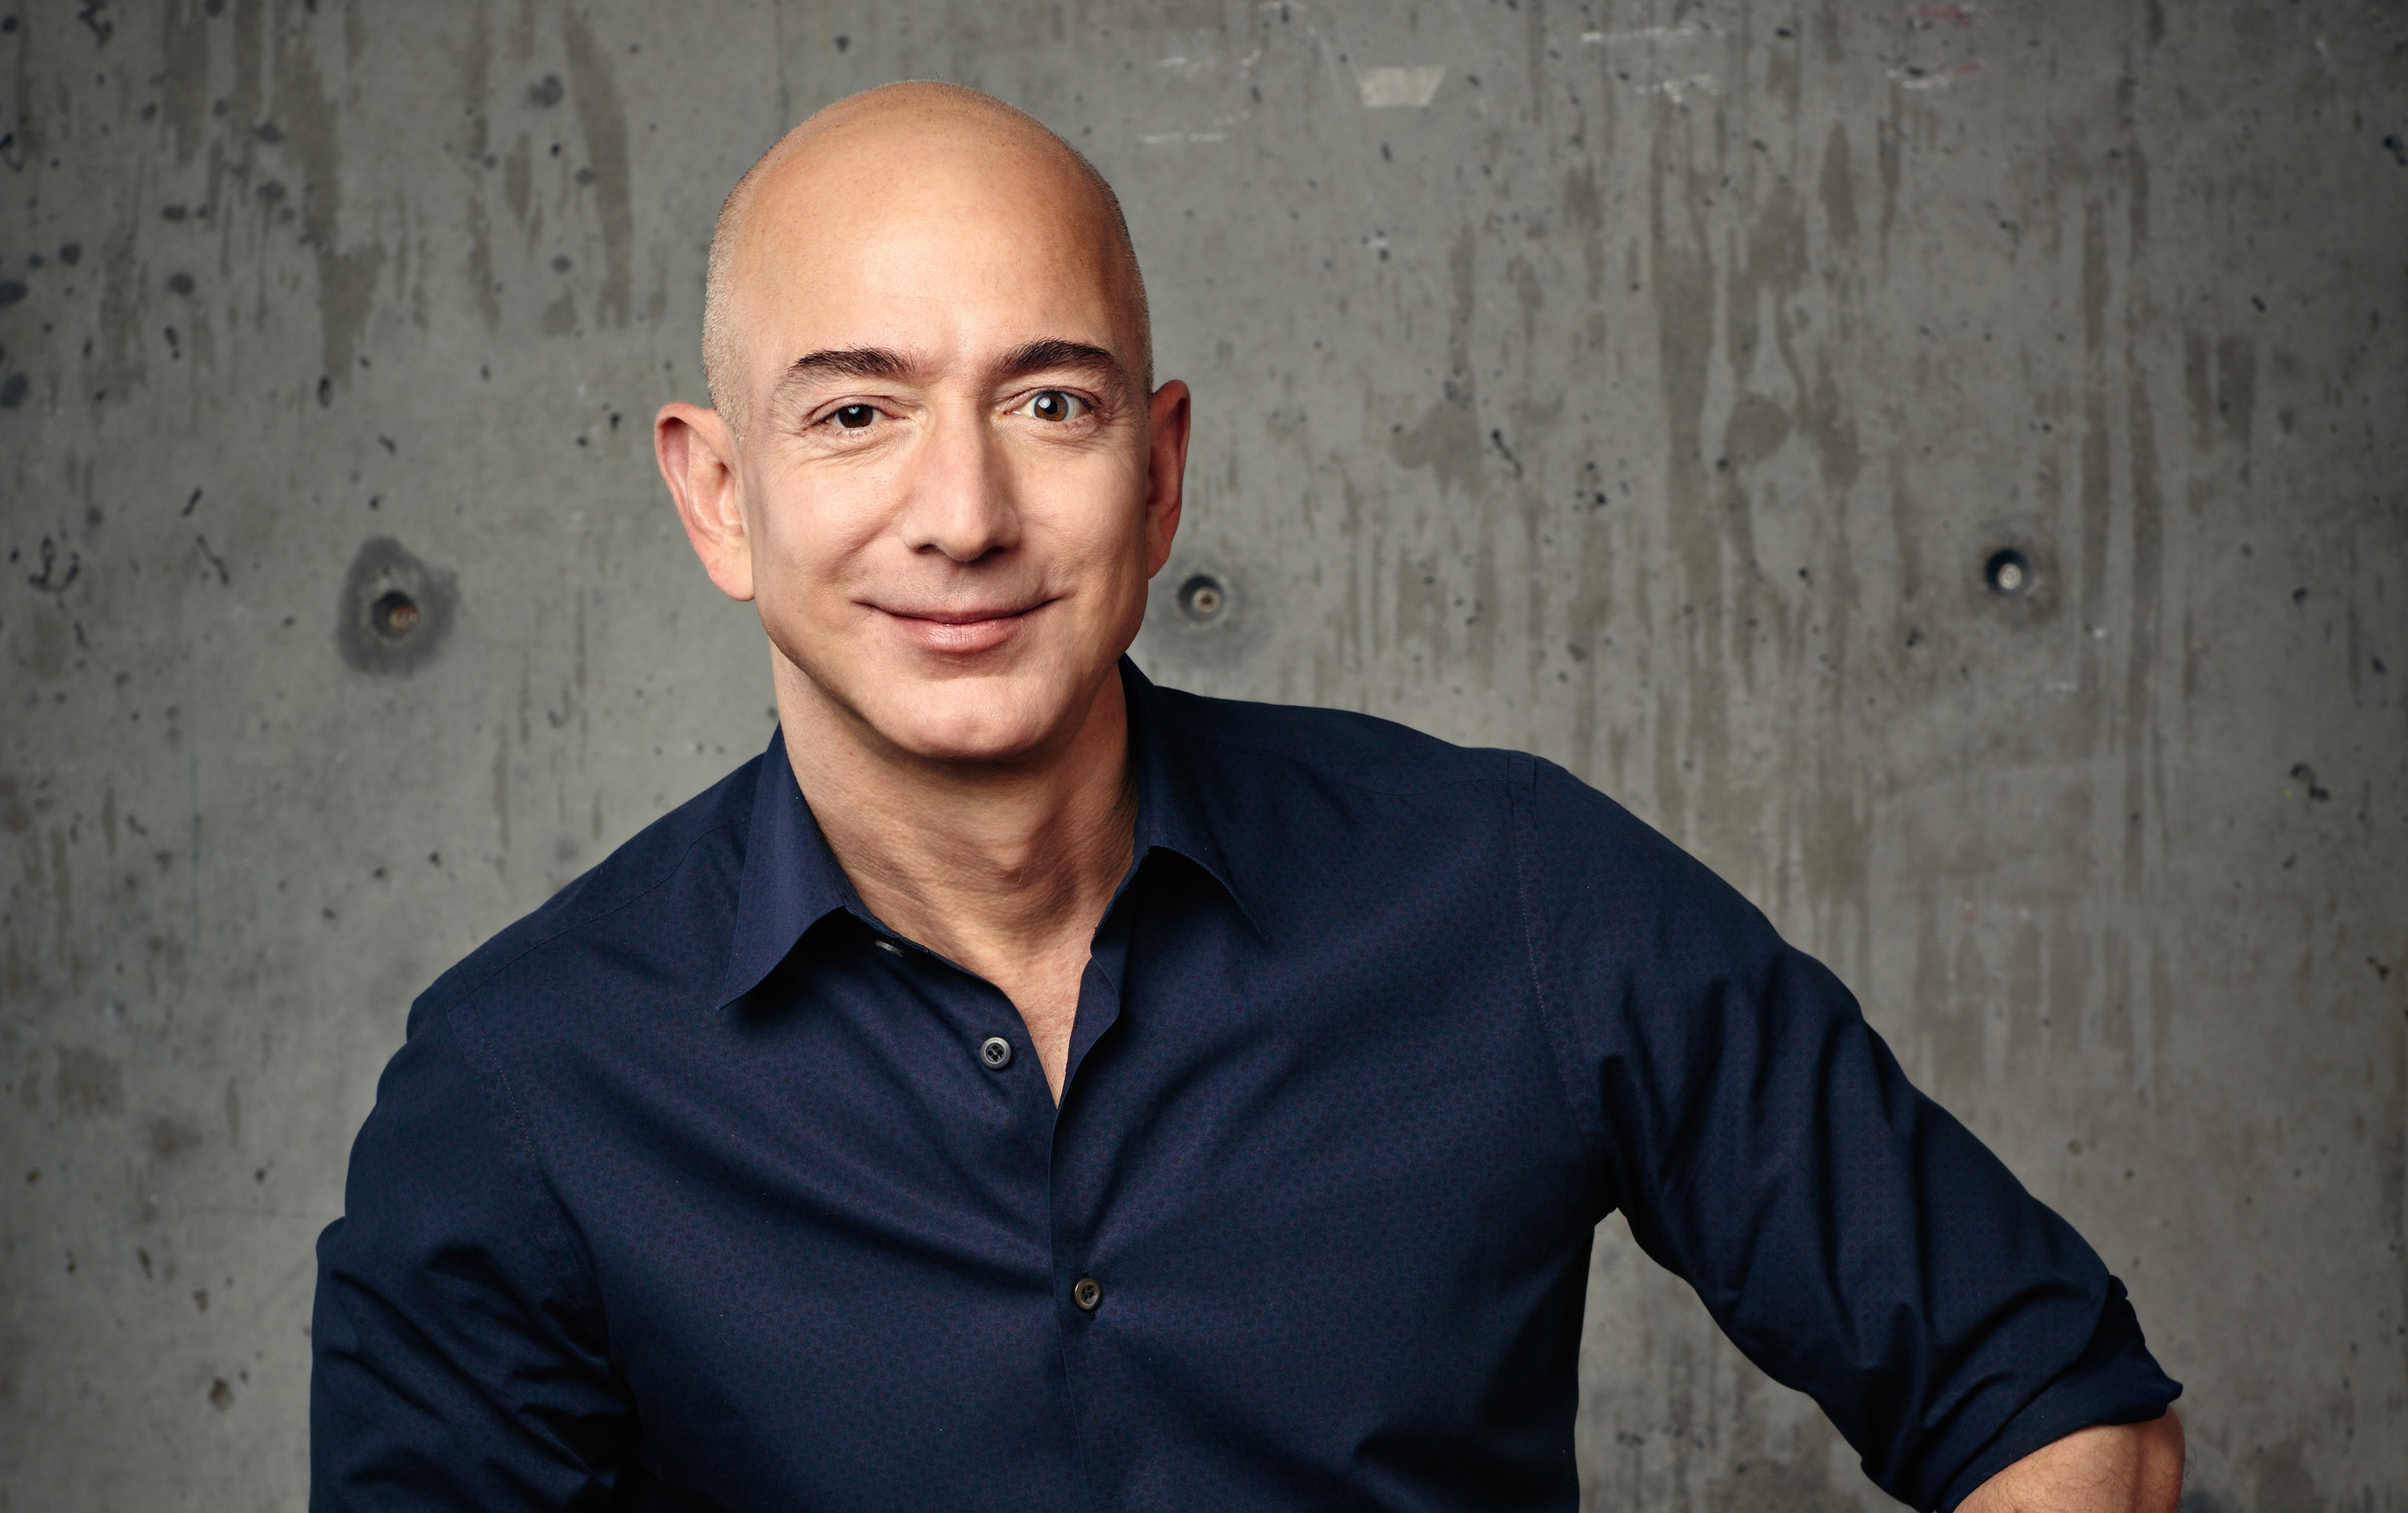 Bezos ne sera plus le patron d'Amazon au 5 juillet prochain